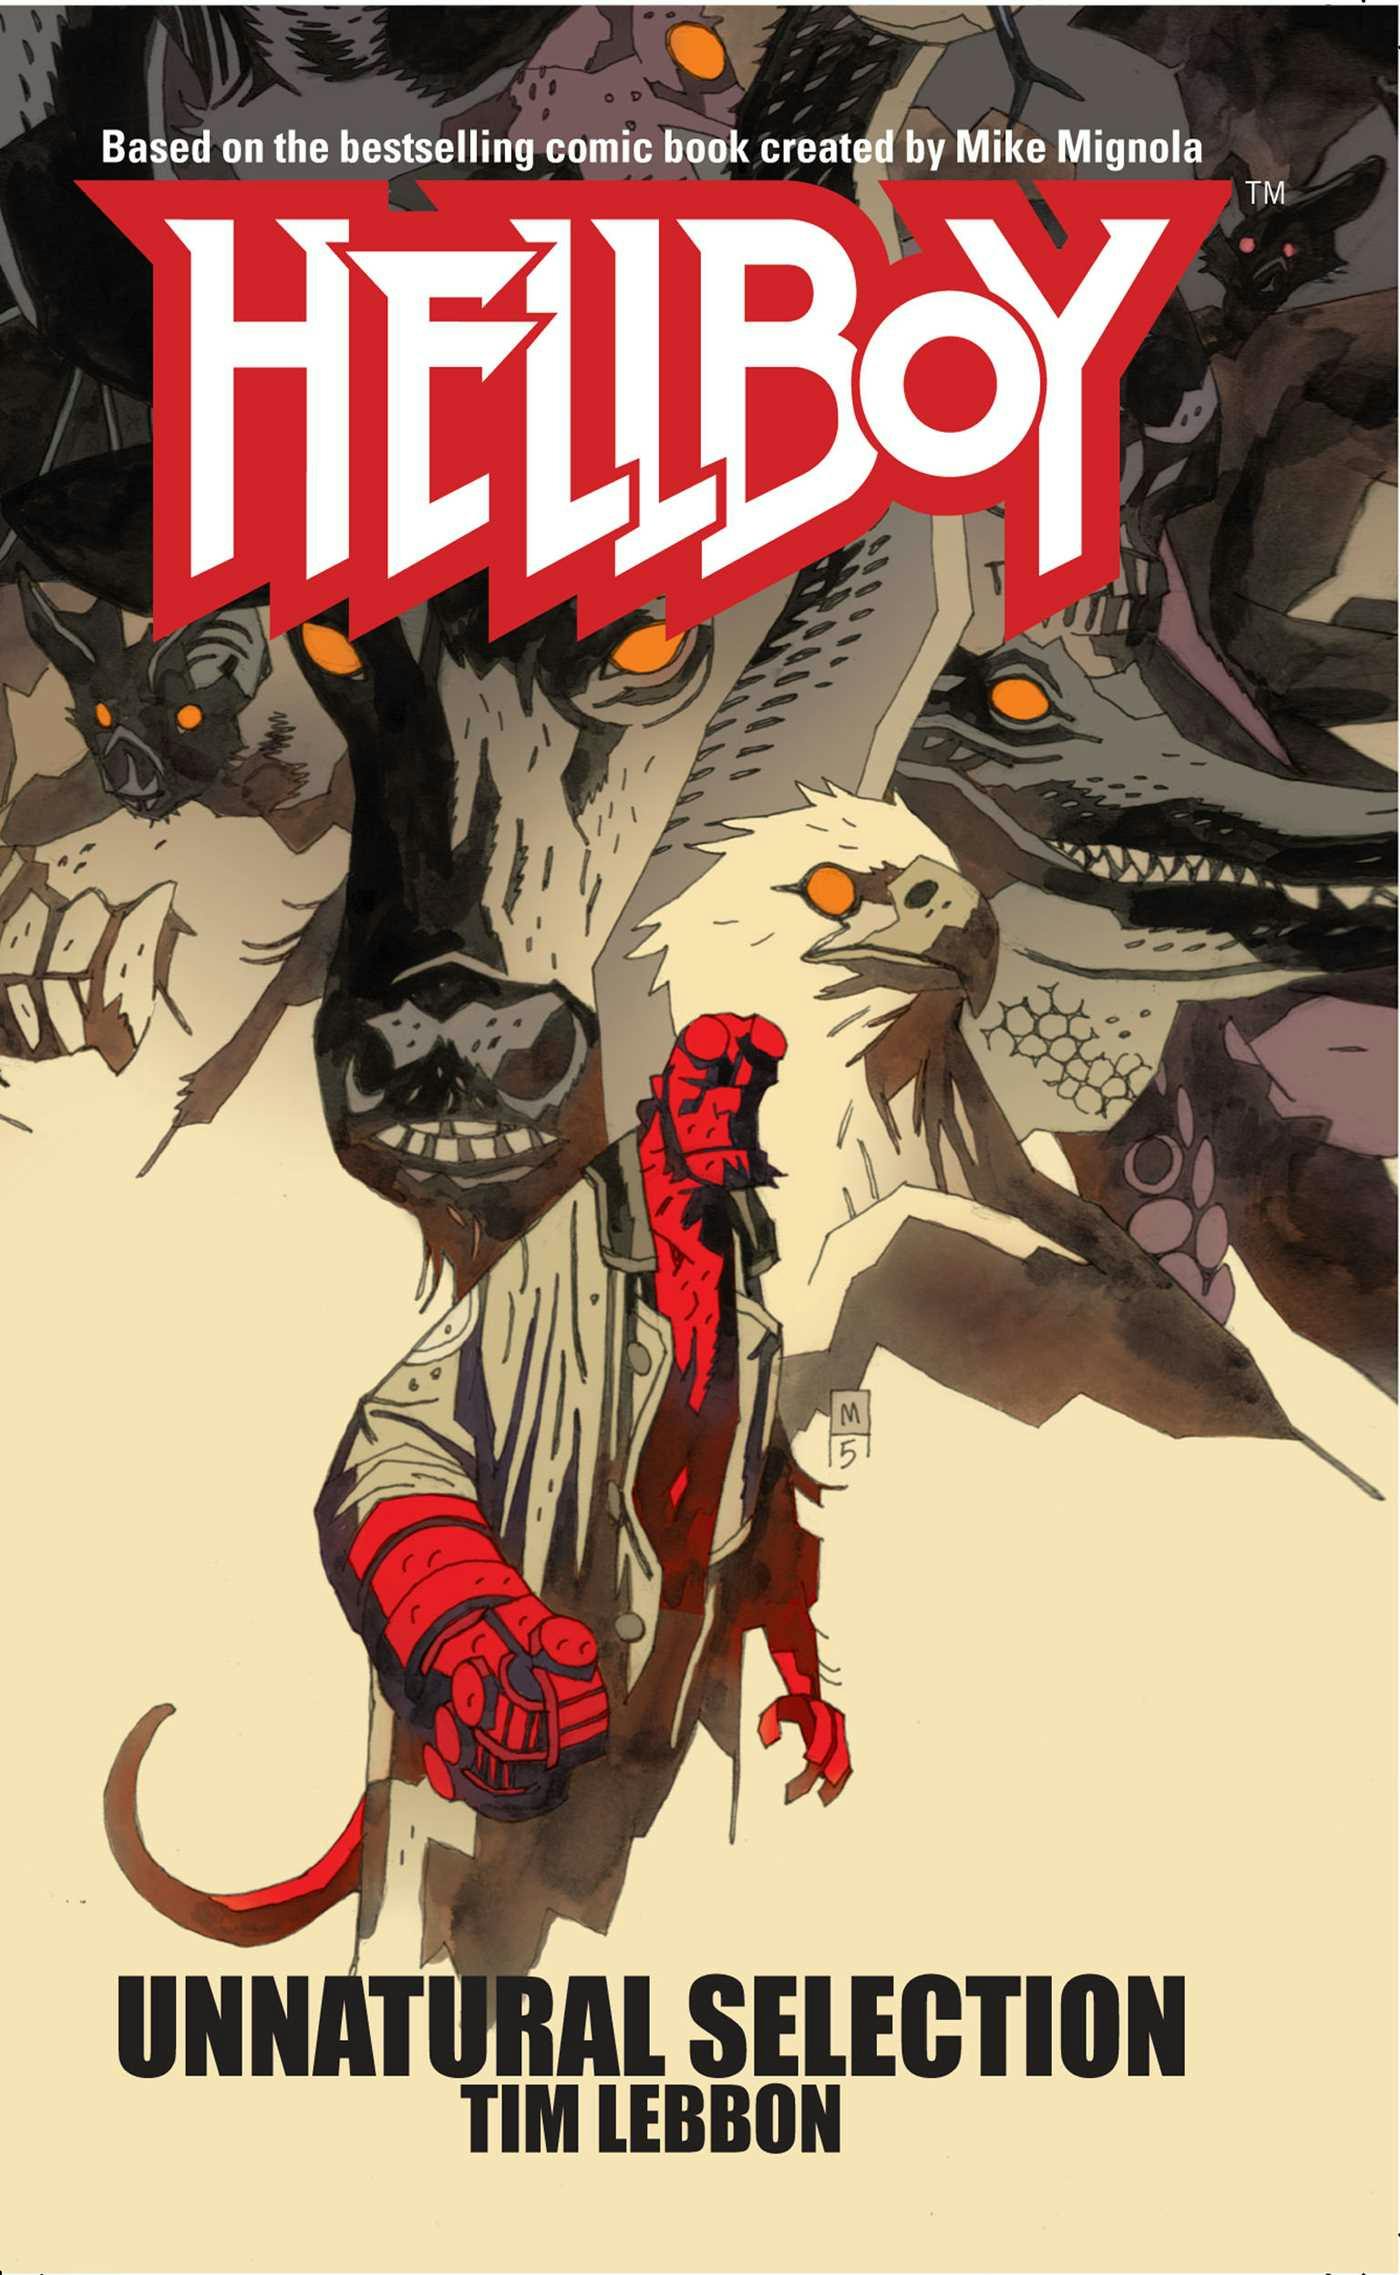 Unnatural Selection: A Hellboy Novel - undefined